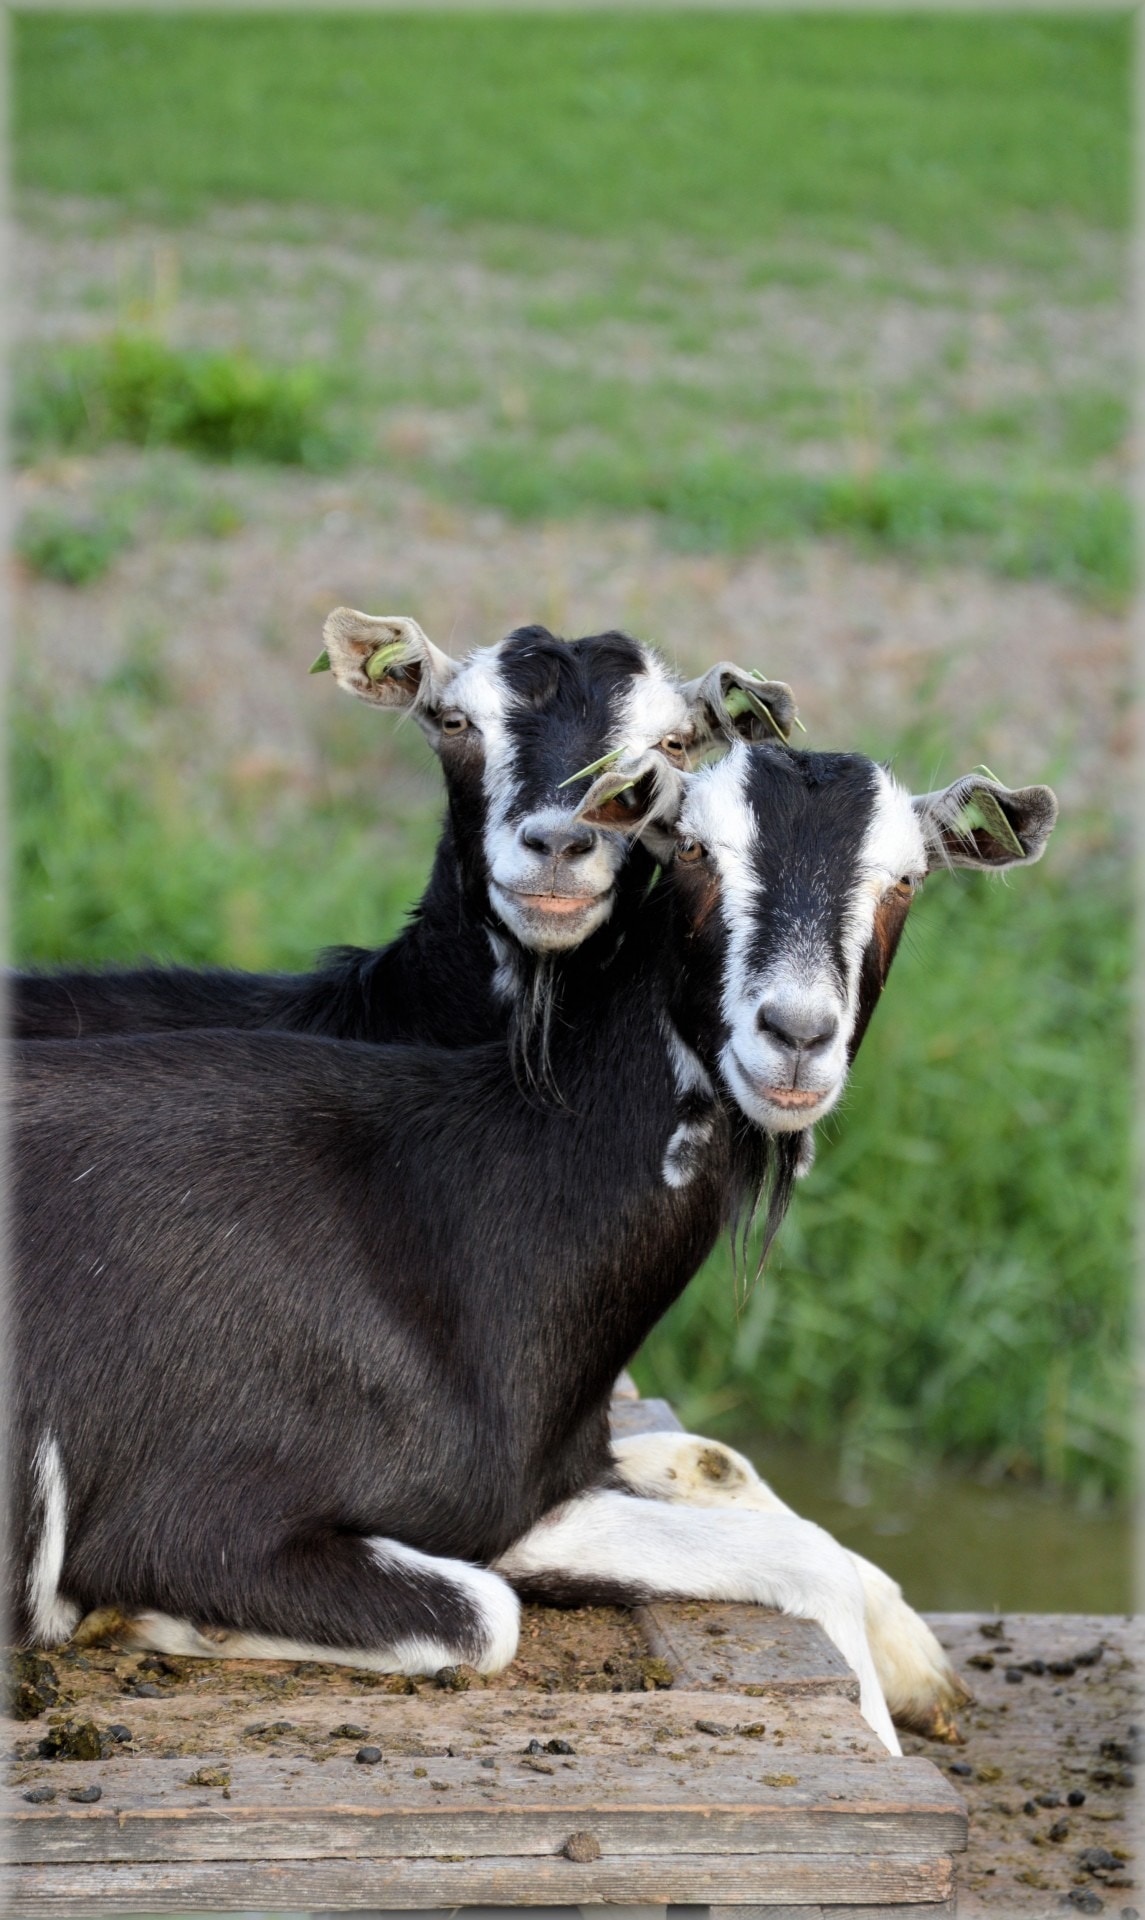 Herd, Goat, Outdoor, Animals, Farm, animal themes, domestic animals